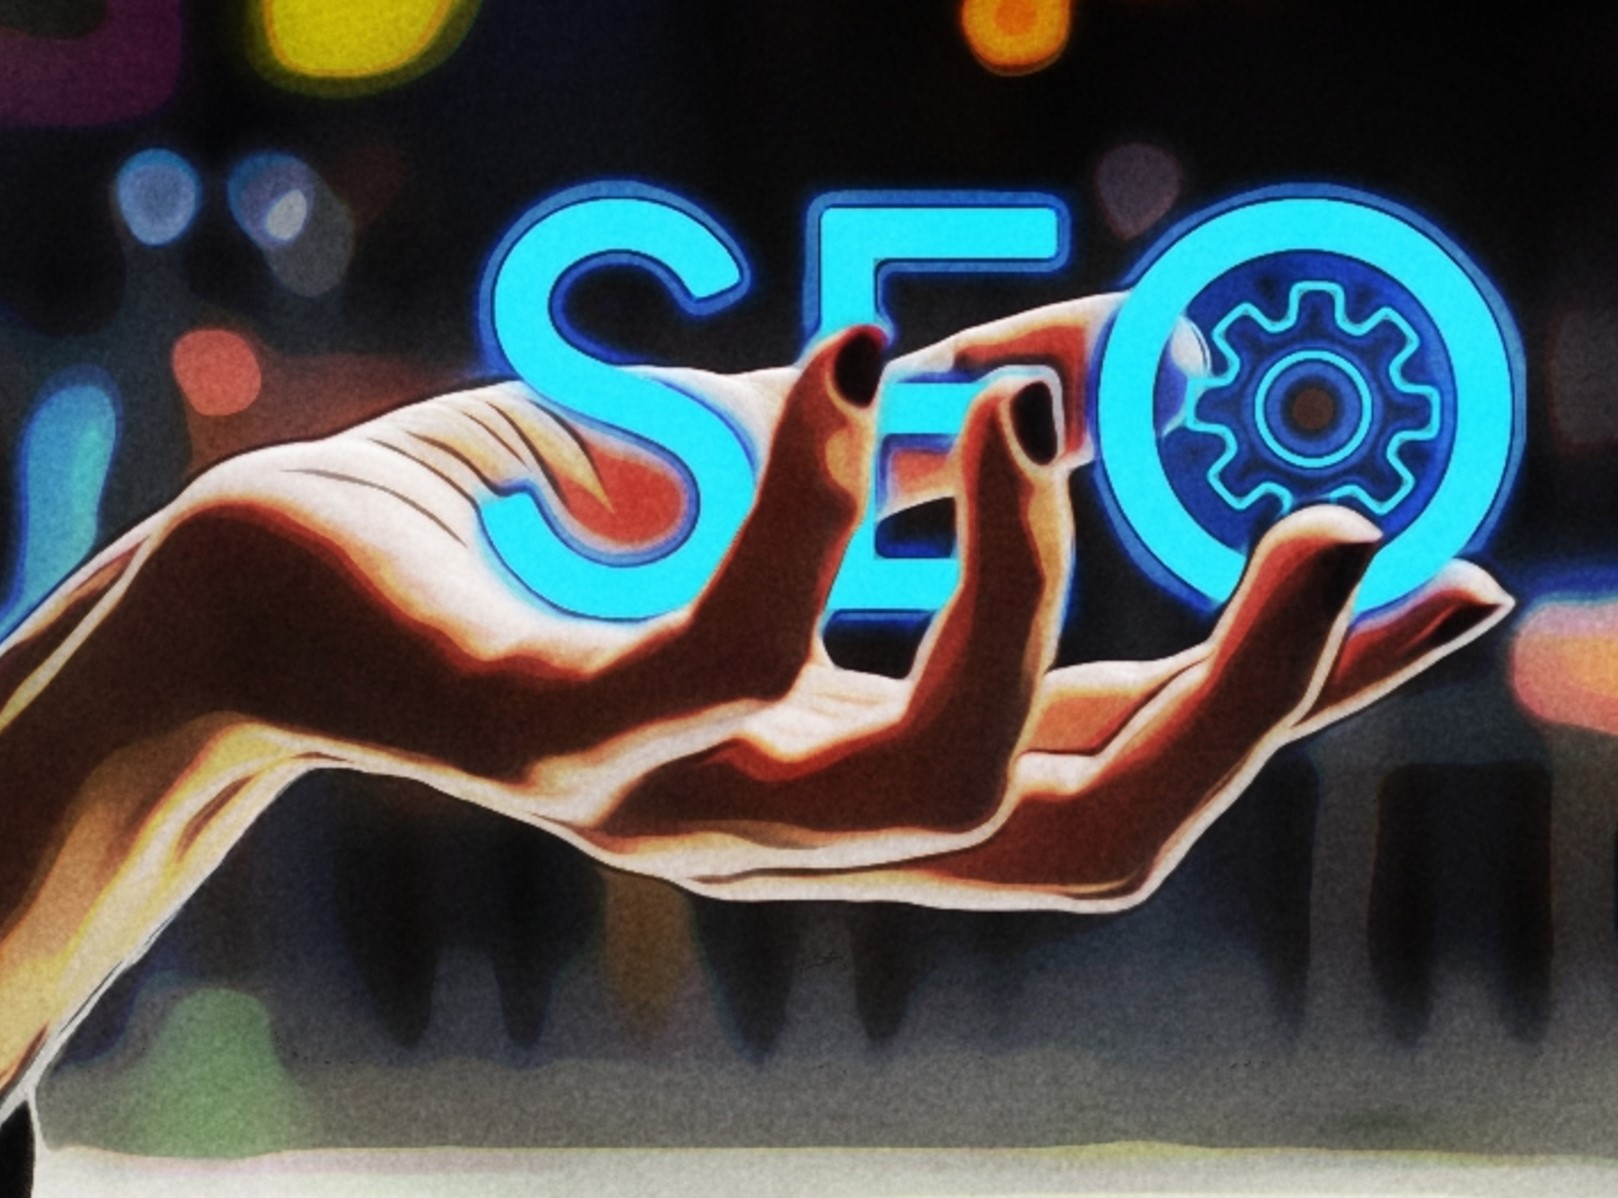 Perth Search Engine Marketing